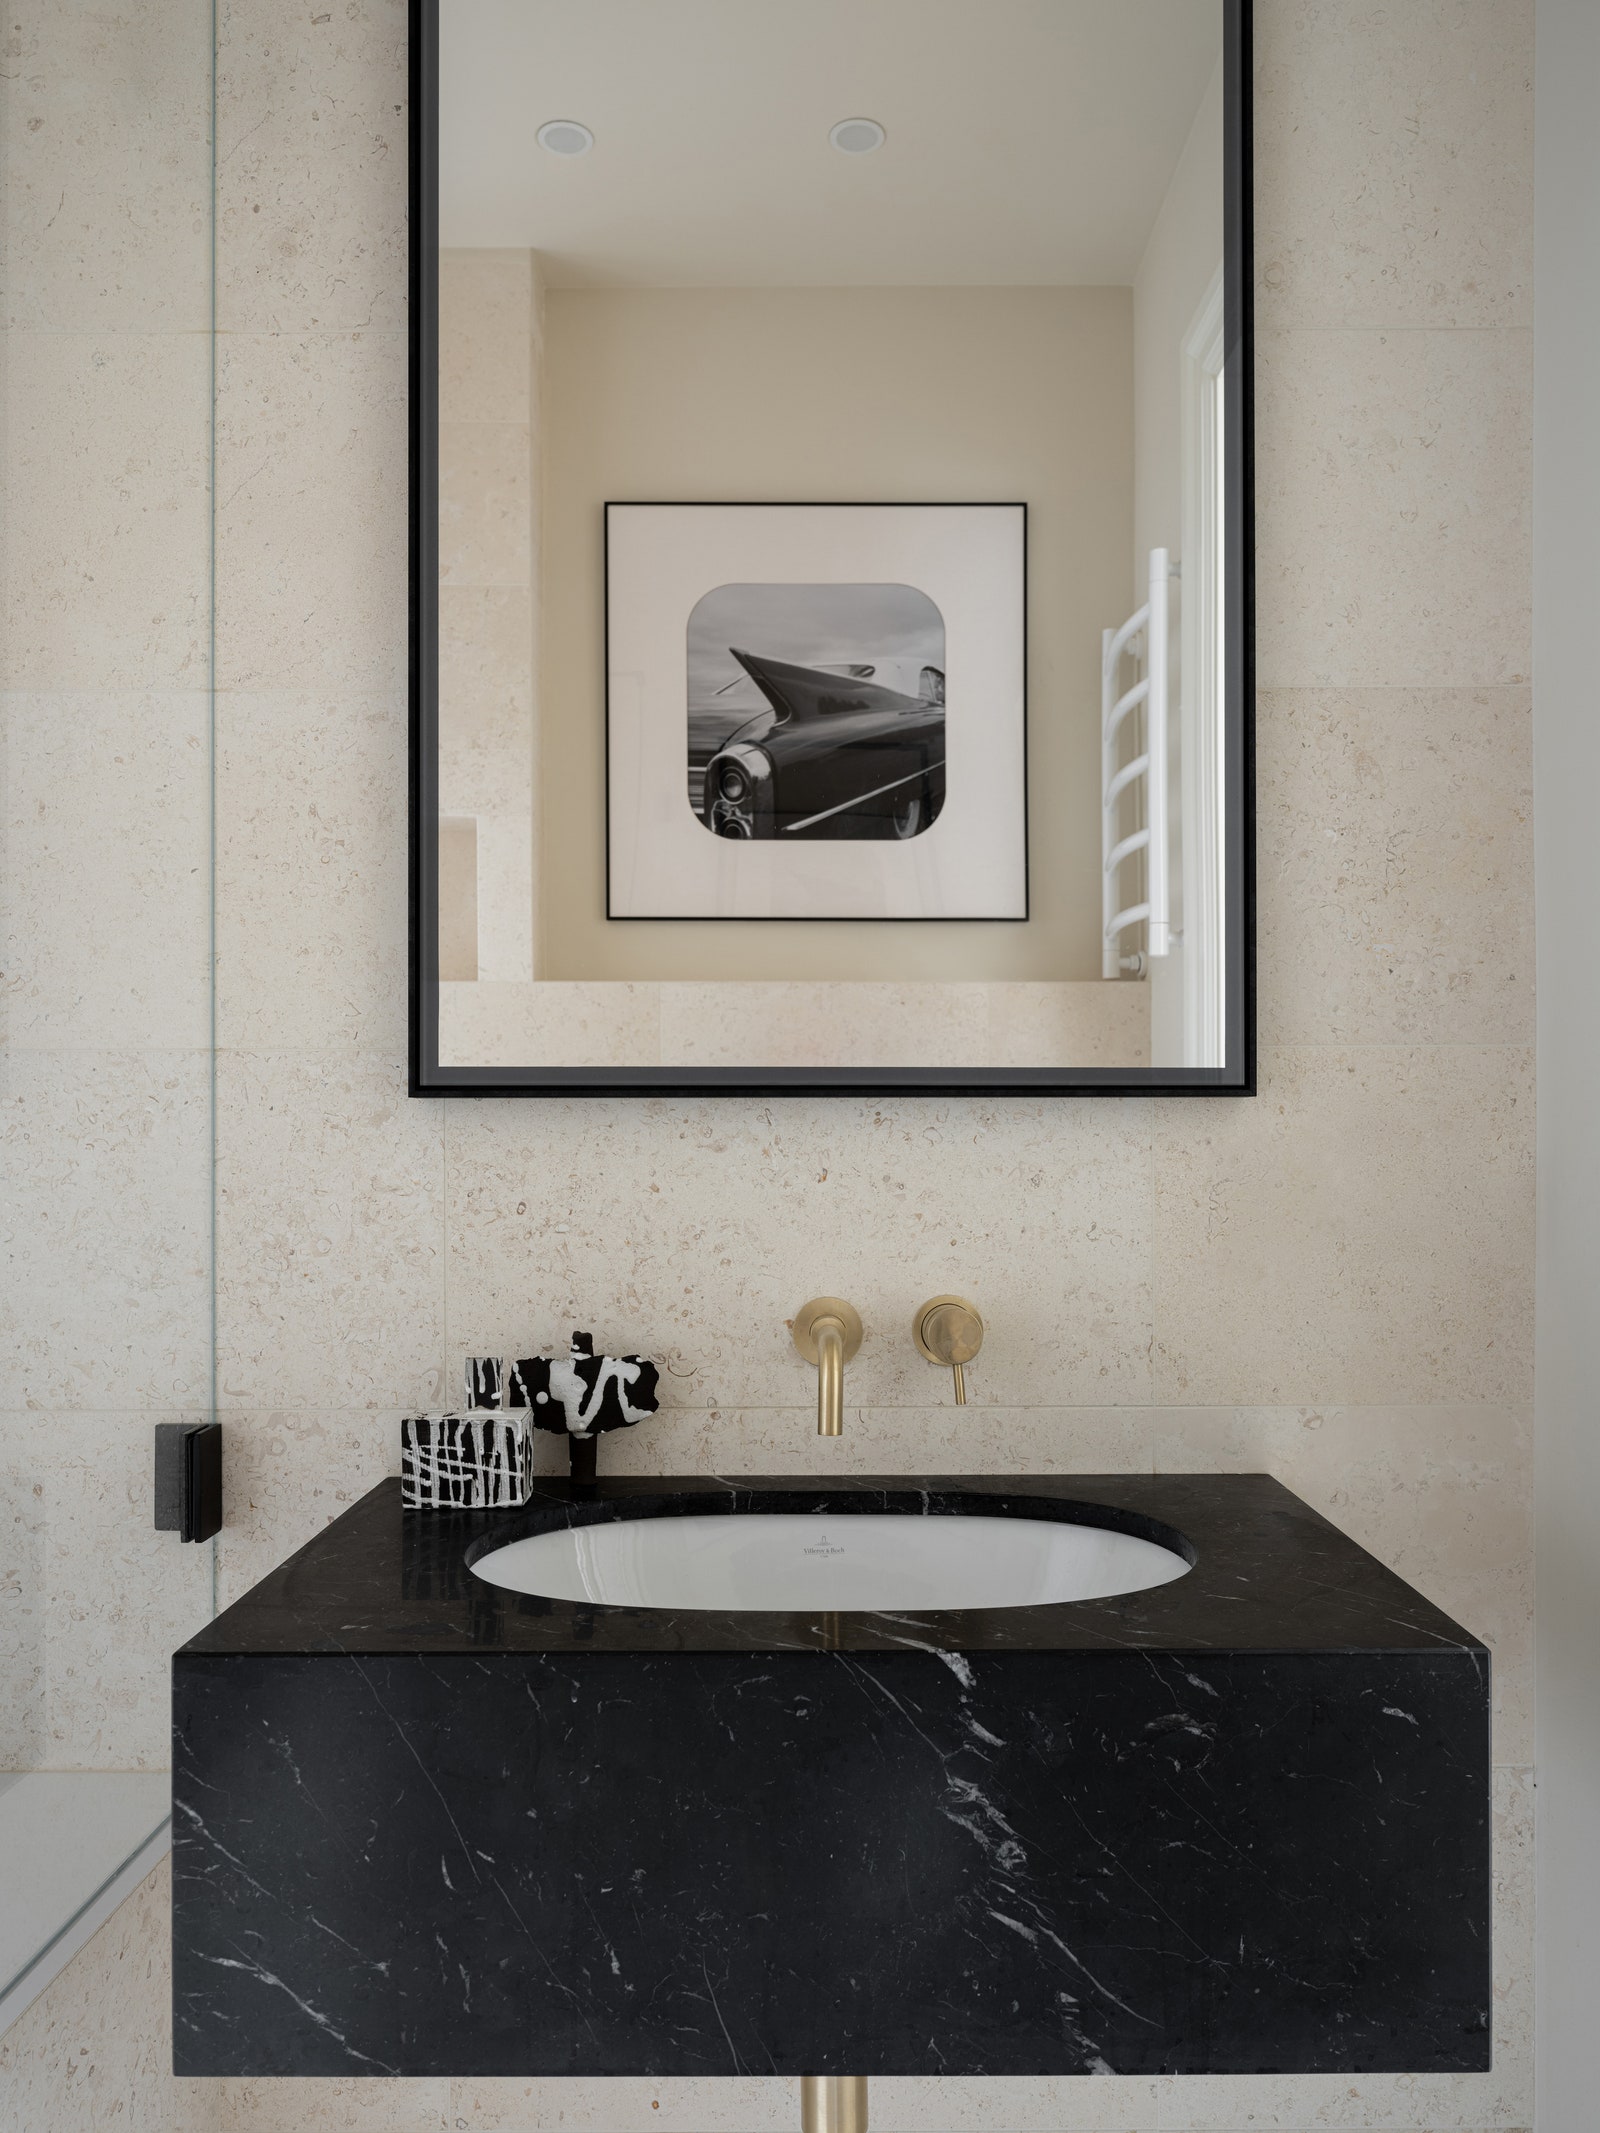 Детская ванная комната. Мраморная подстолье и зеркало сделаны на заказ на стенах каменная плиткаnbspPetra Antiqua...